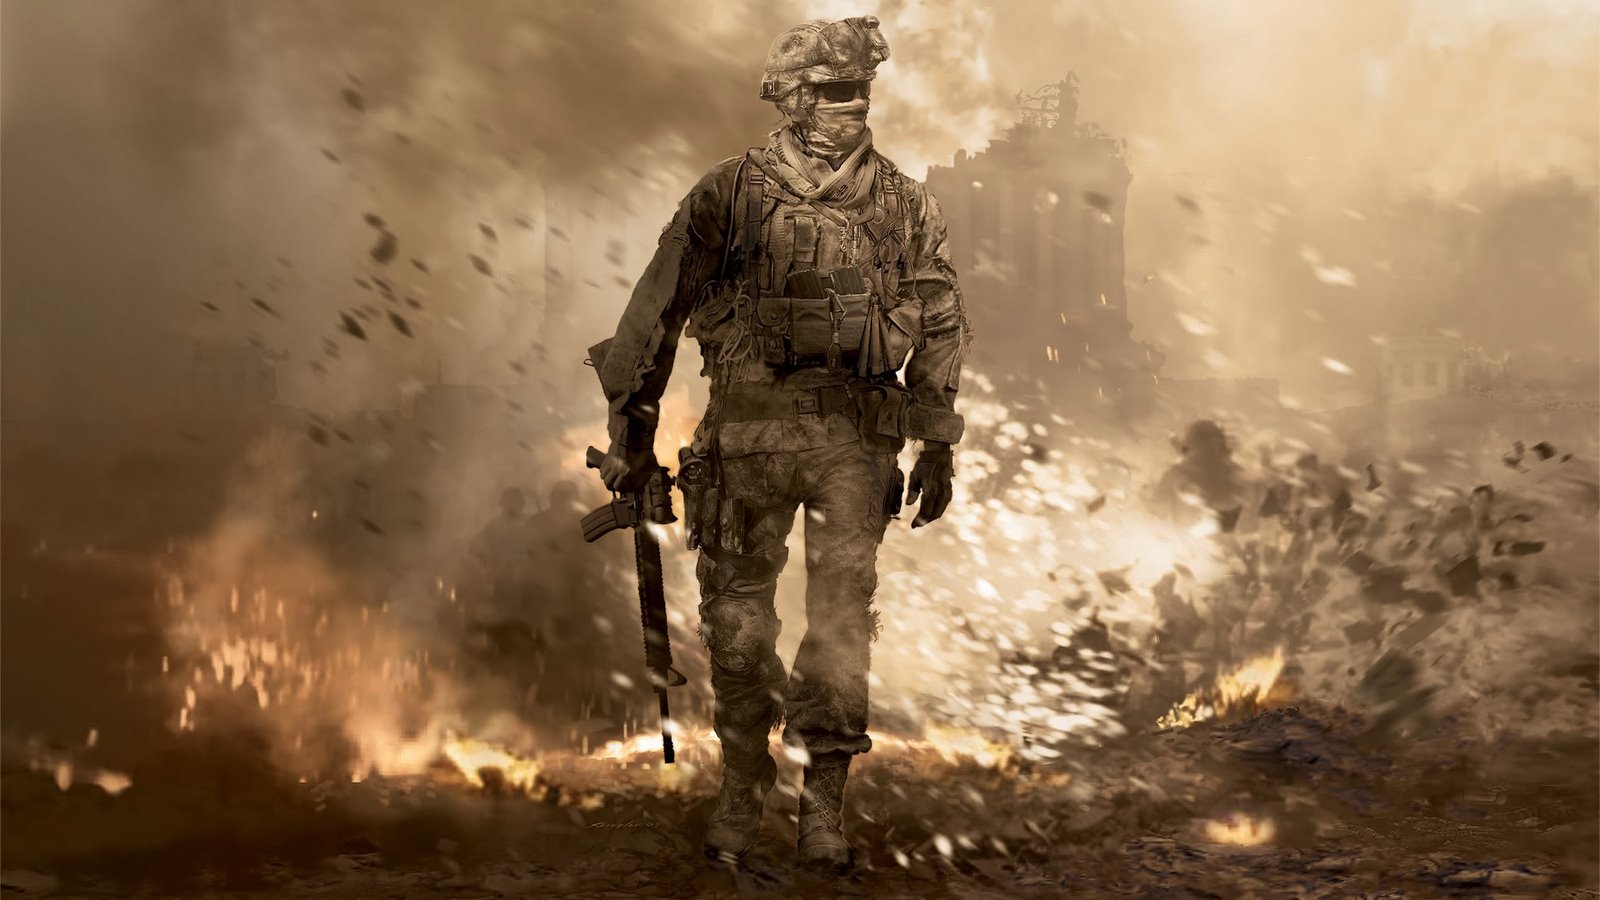 cod wallpaper hd,movie,soldier,action adventure game,troop,action film